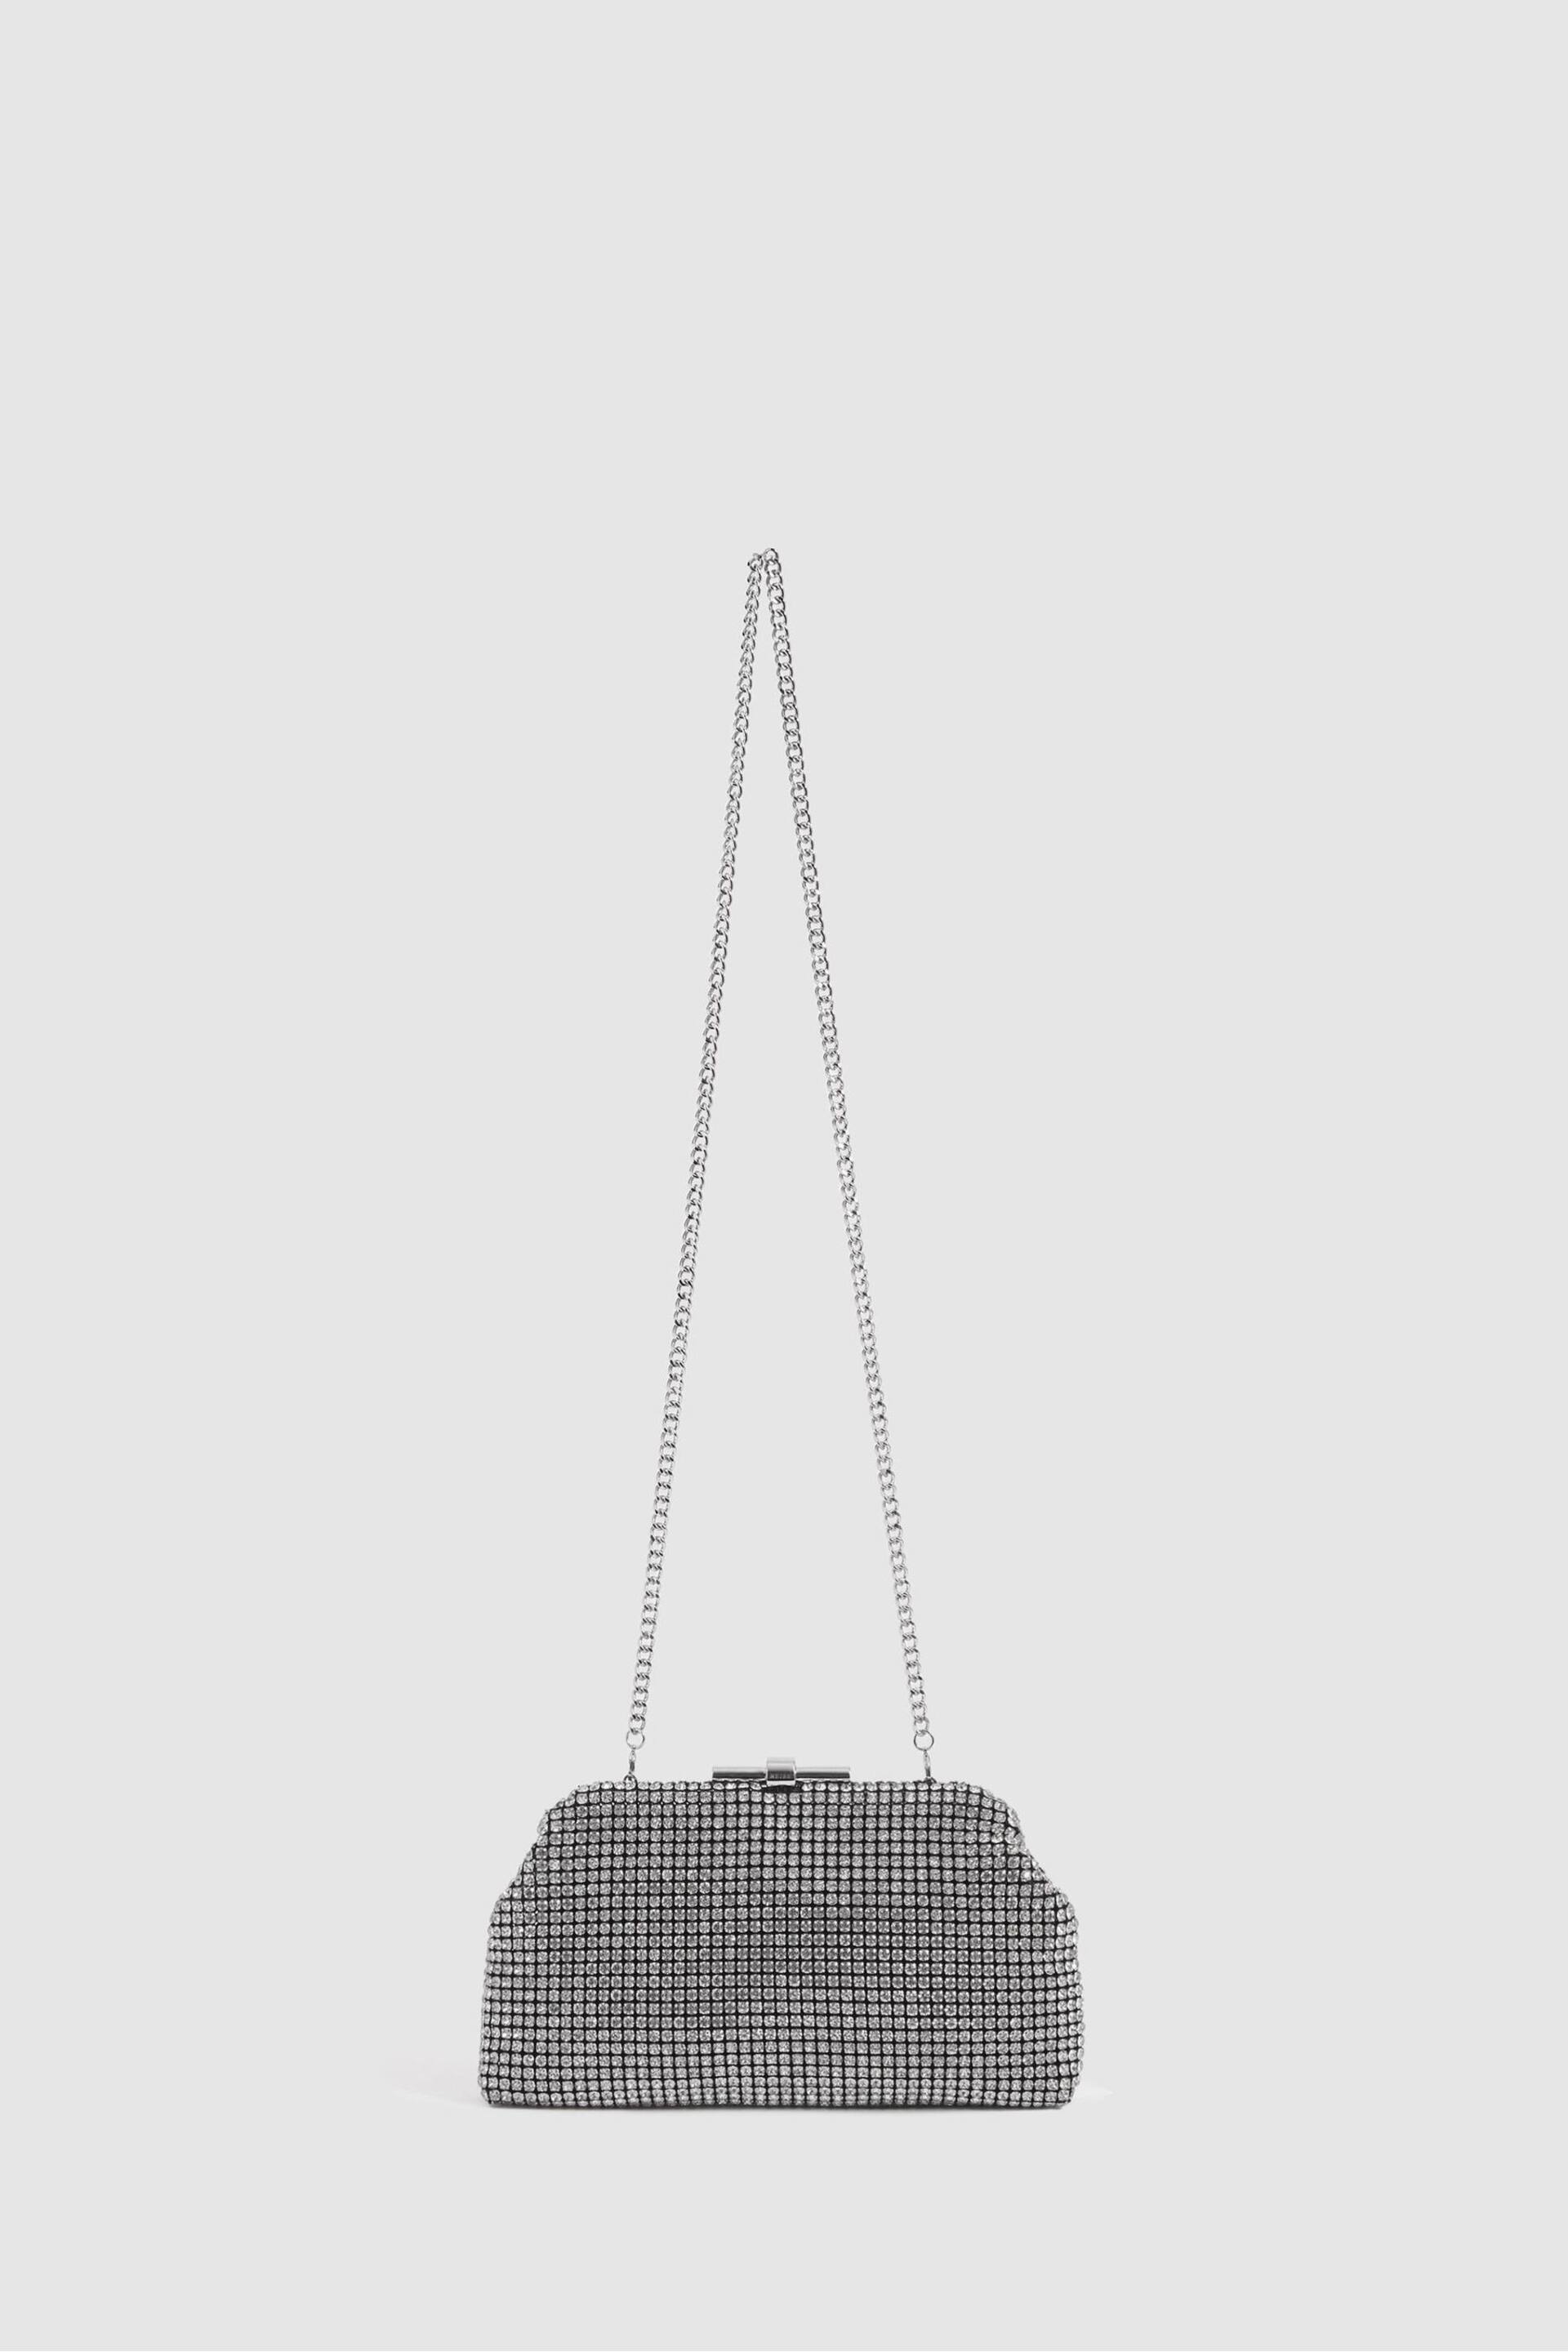 Reiss Silver Adaline Embellished Clutch Bag - Image 8 of 9